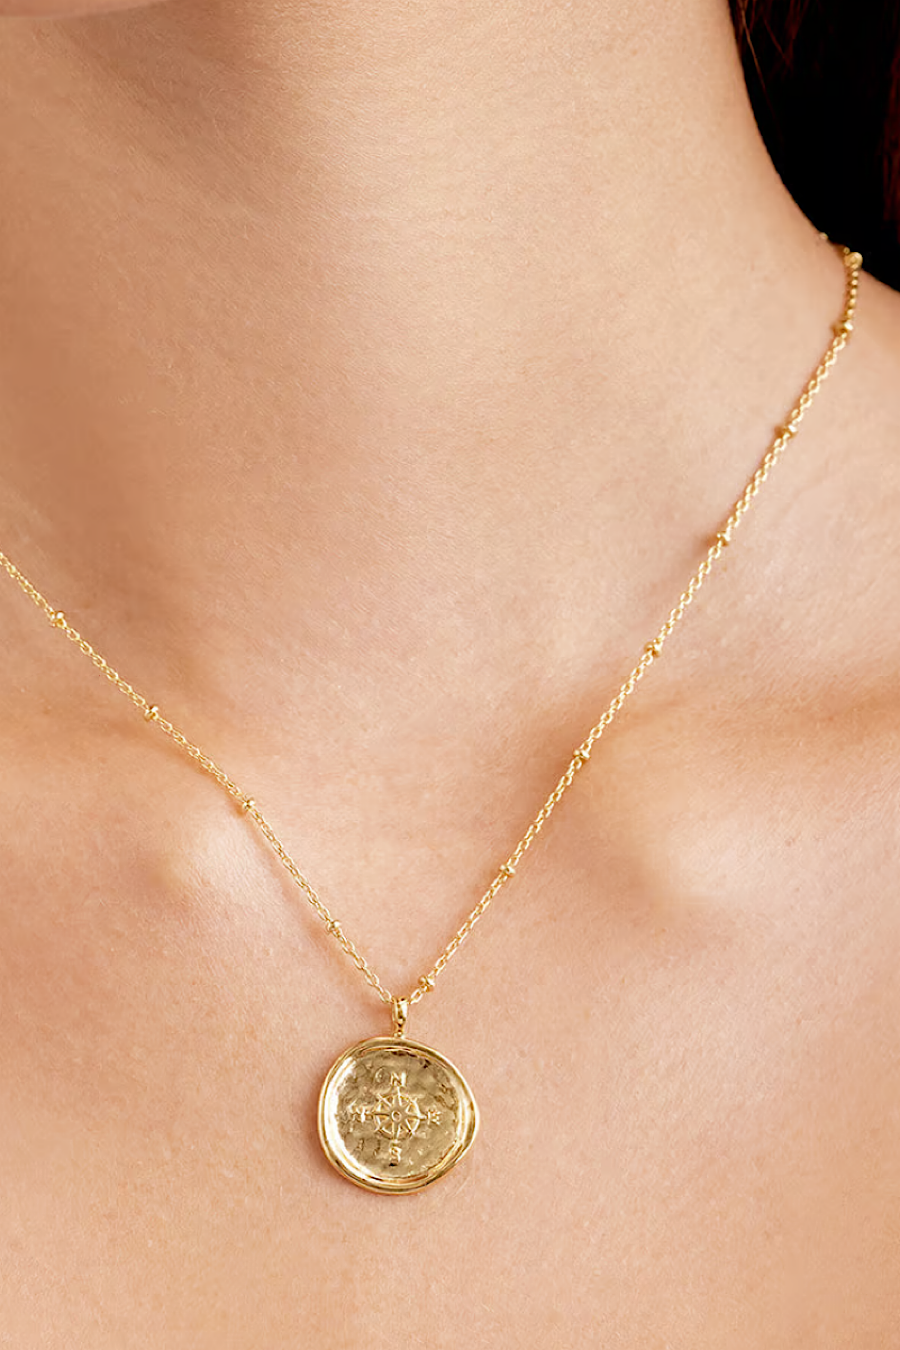 Gorjana Compass Coin Necklace Gold